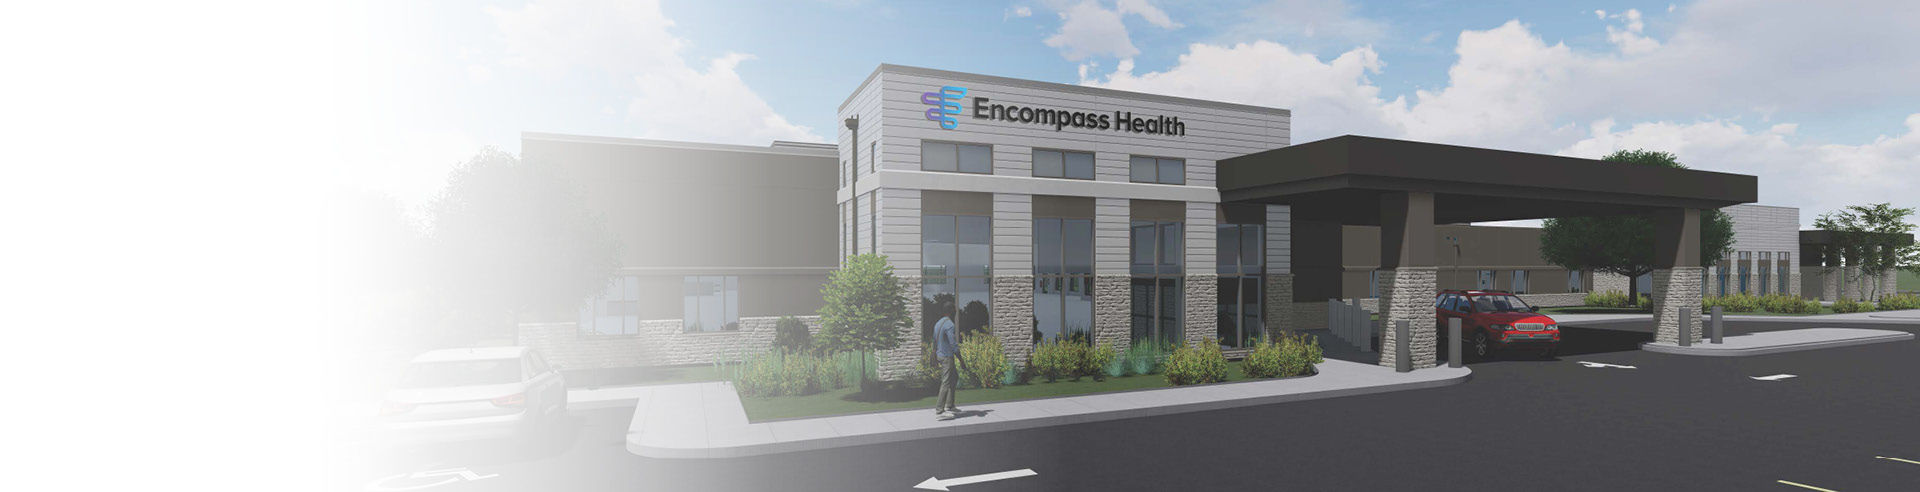 Encompass Health Rehabilitation Hospital of Jacksonville exterior